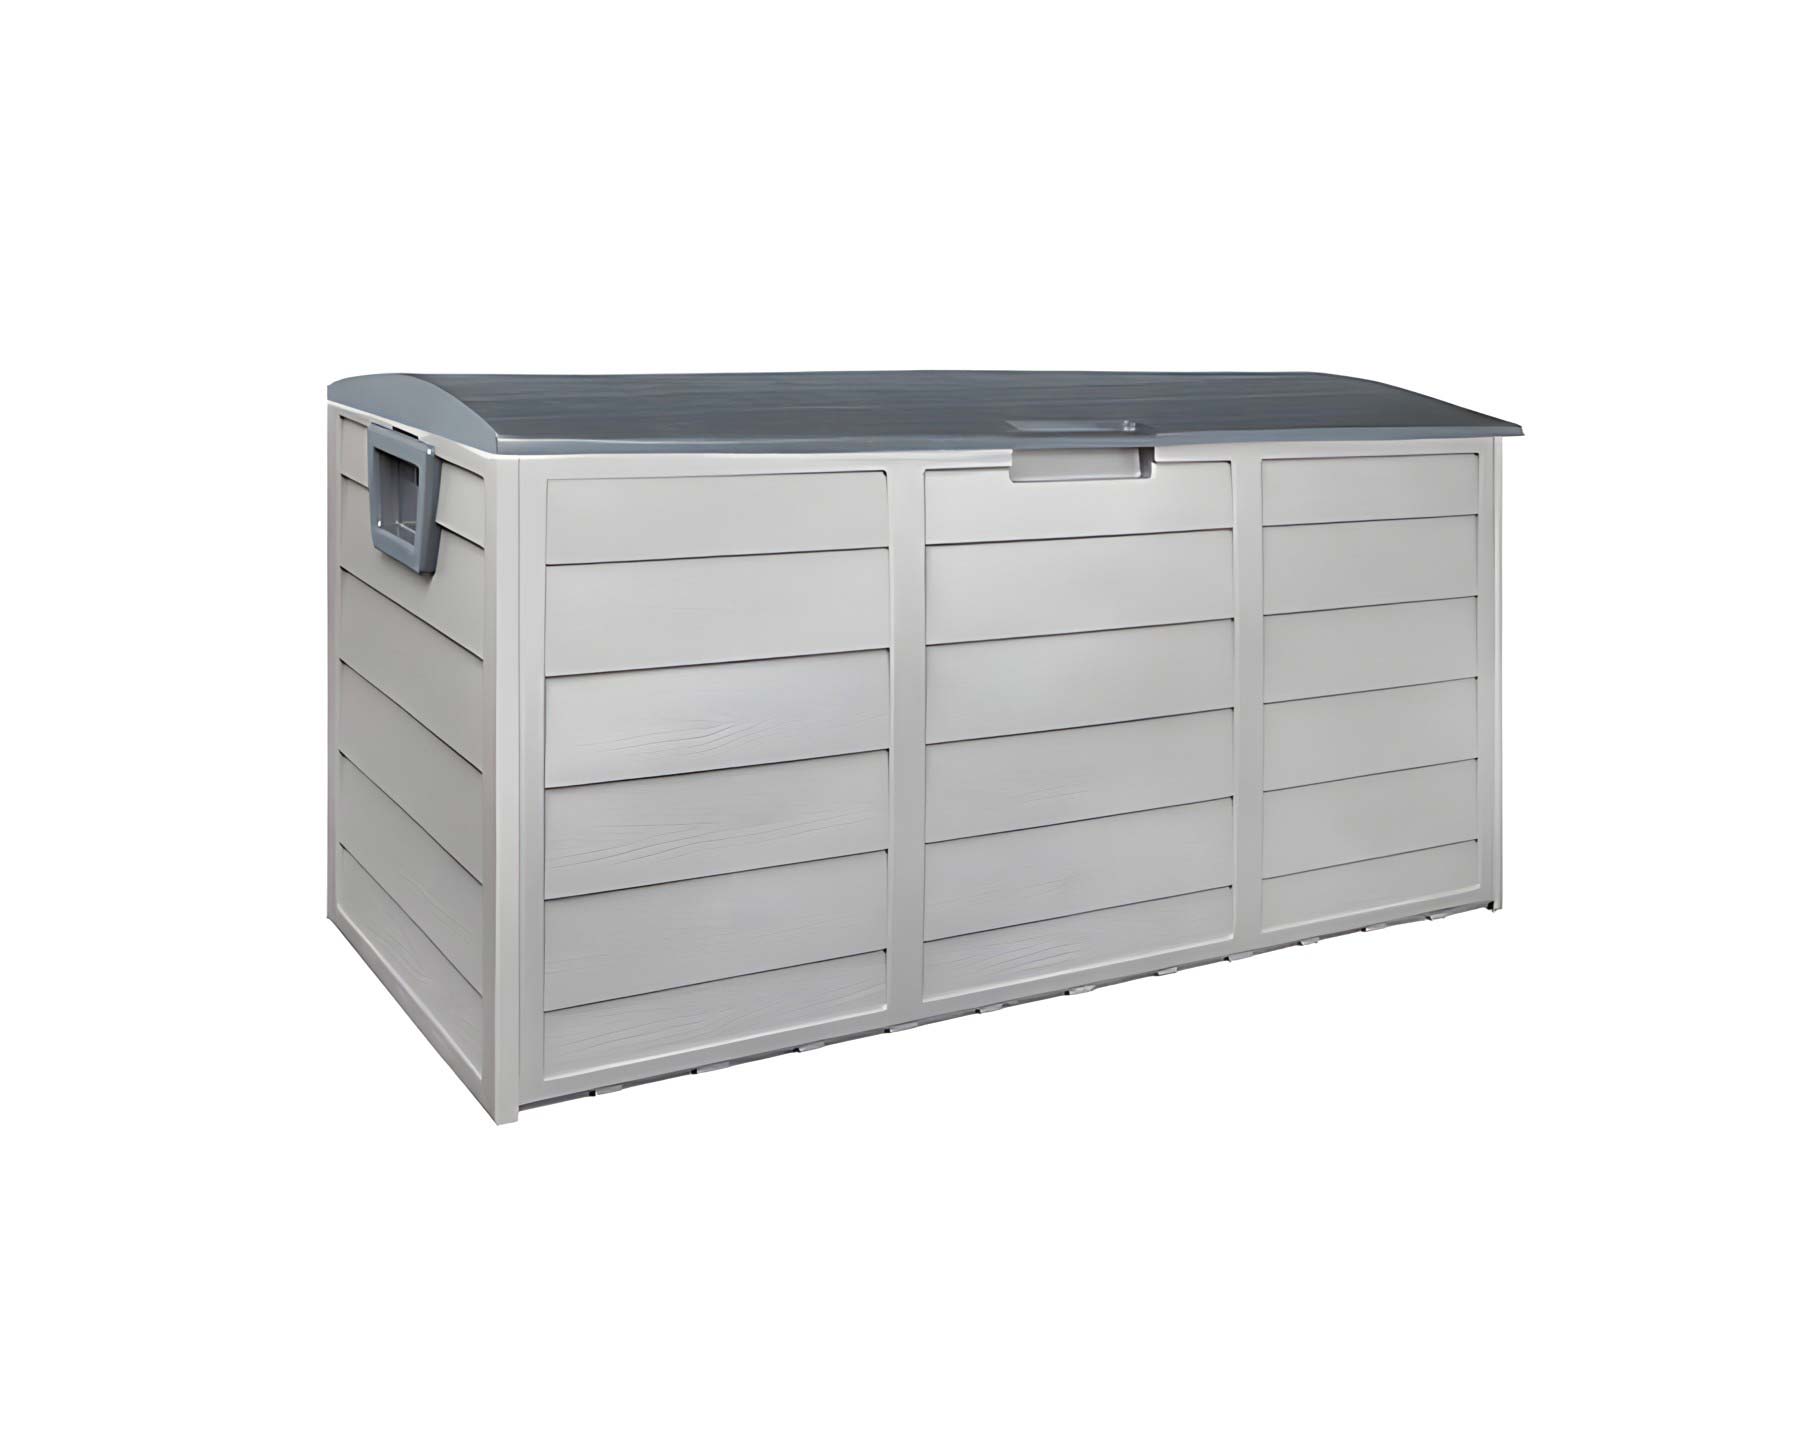 Outdoor storage box 290 litre - grey accent